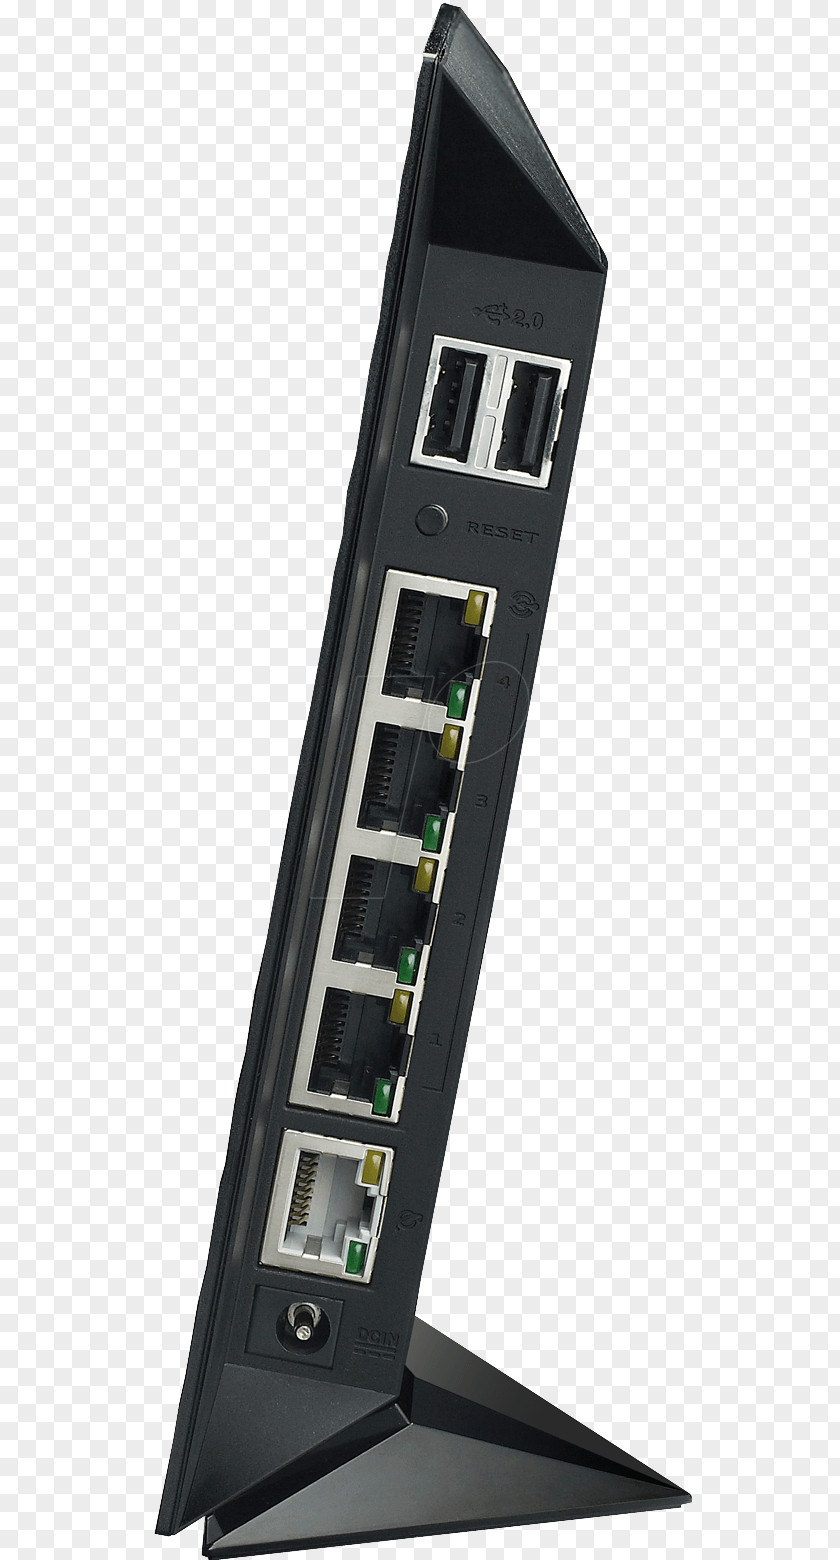 ASUS RT-N56U Wireless Router Gigabit Ethernet PNG